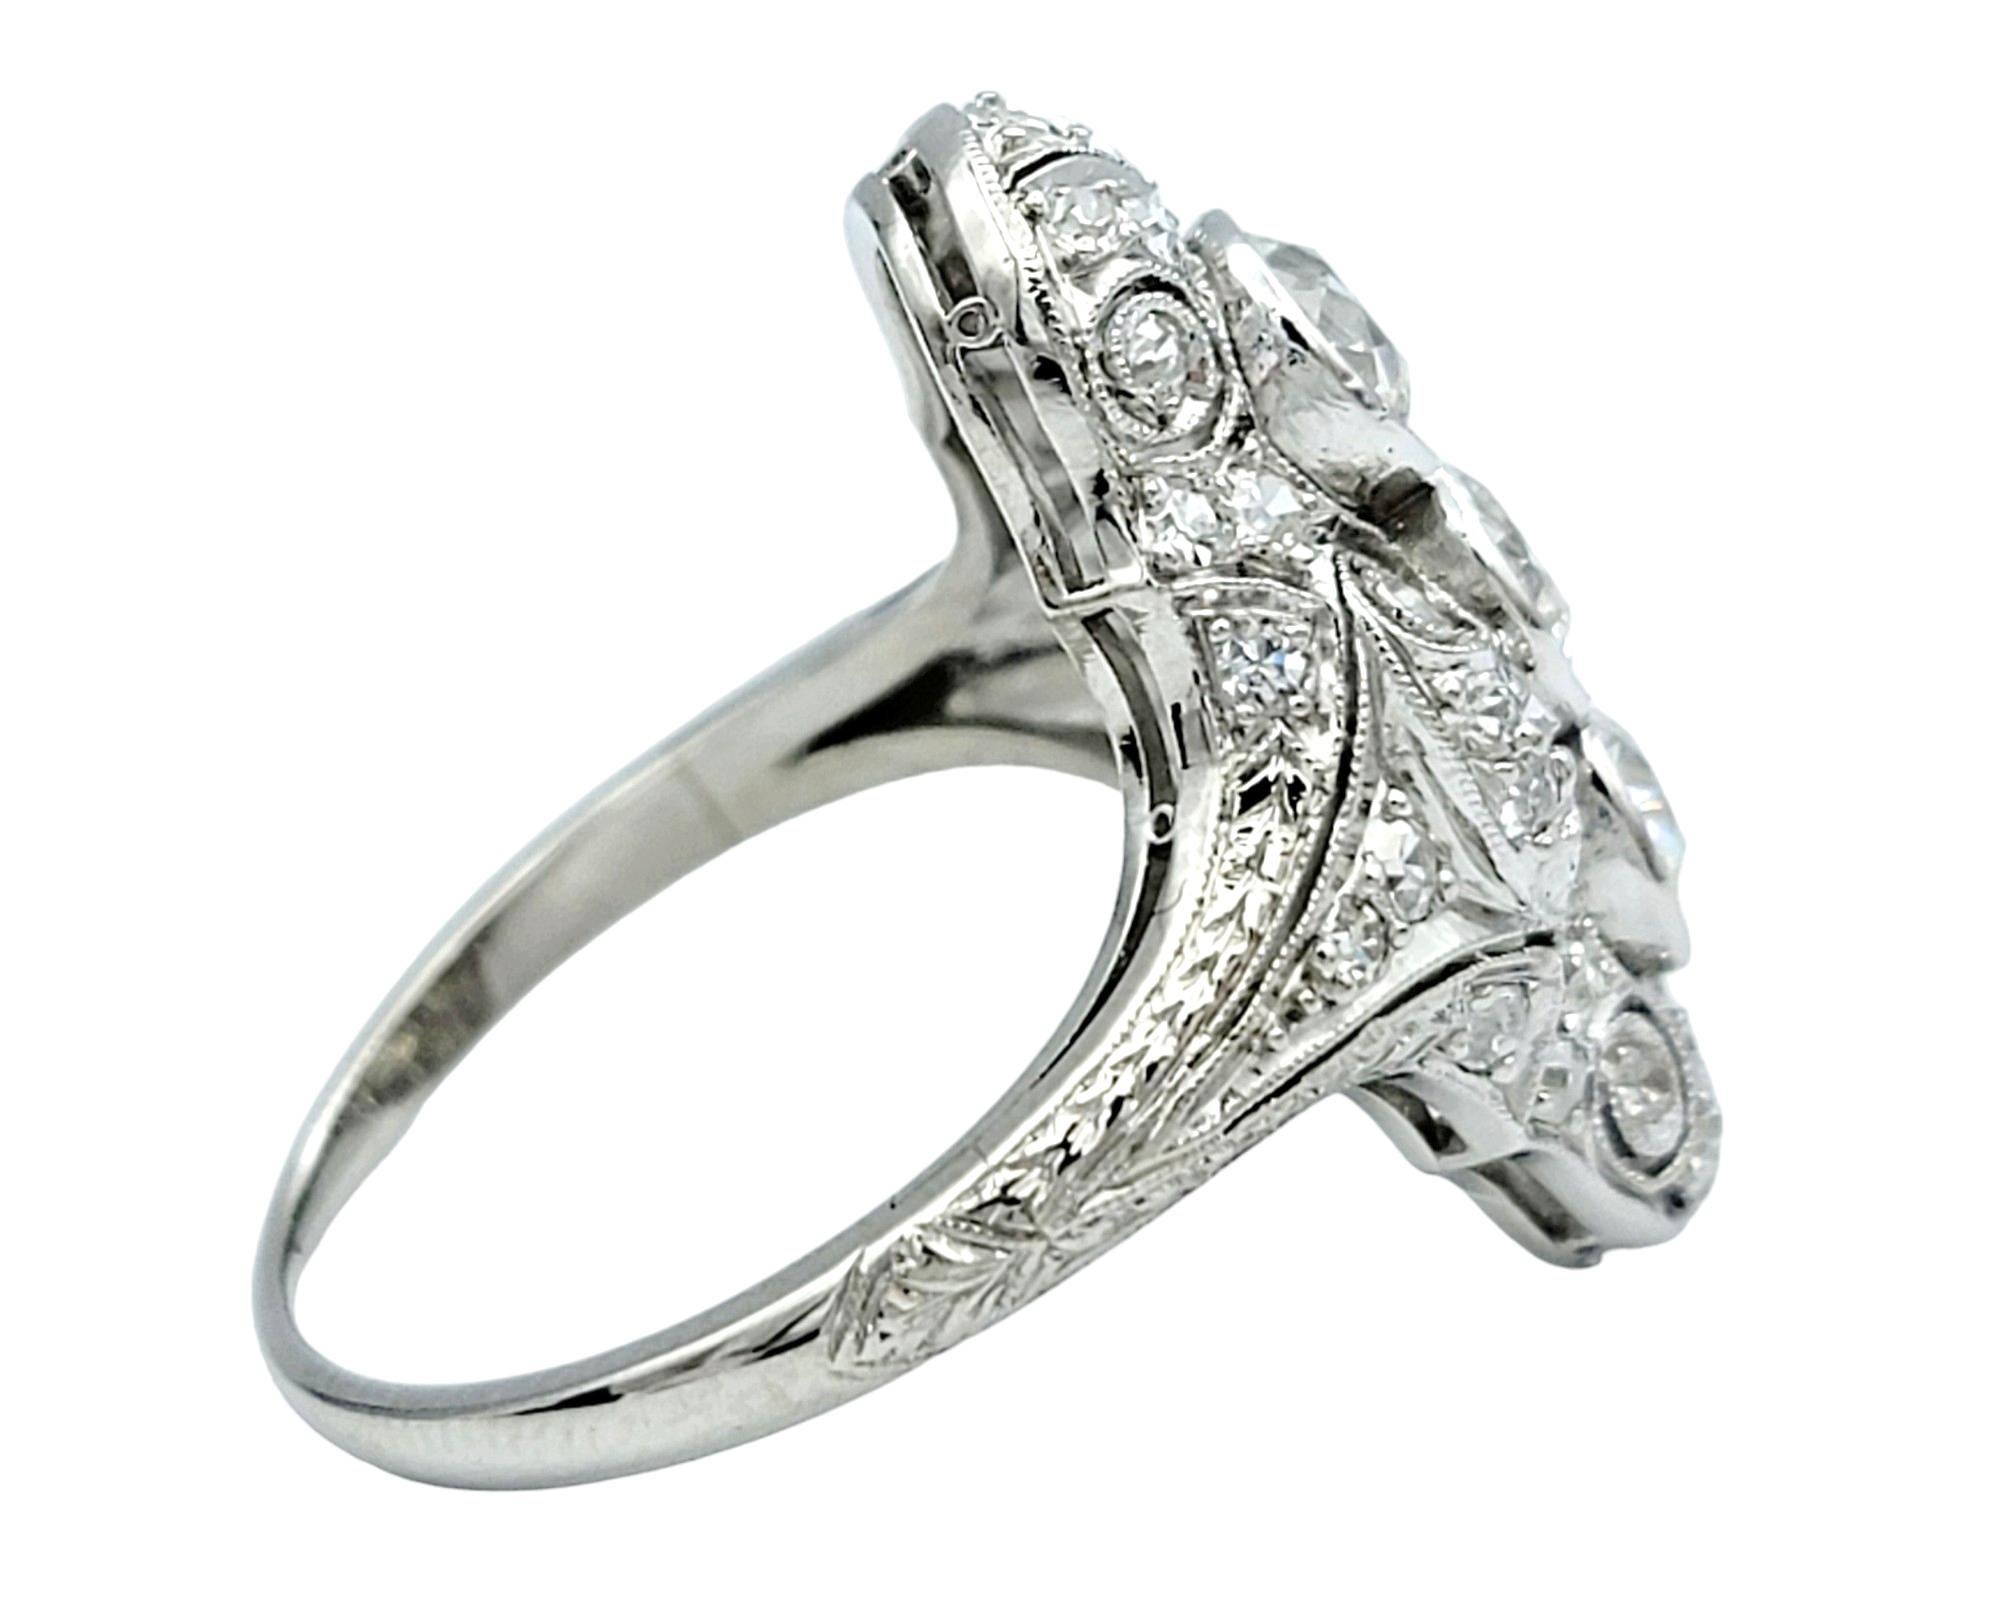 Women's Art Deco Old European Cut Diamond Cocktail Ring with Milgrain Design in Platinum For Sale